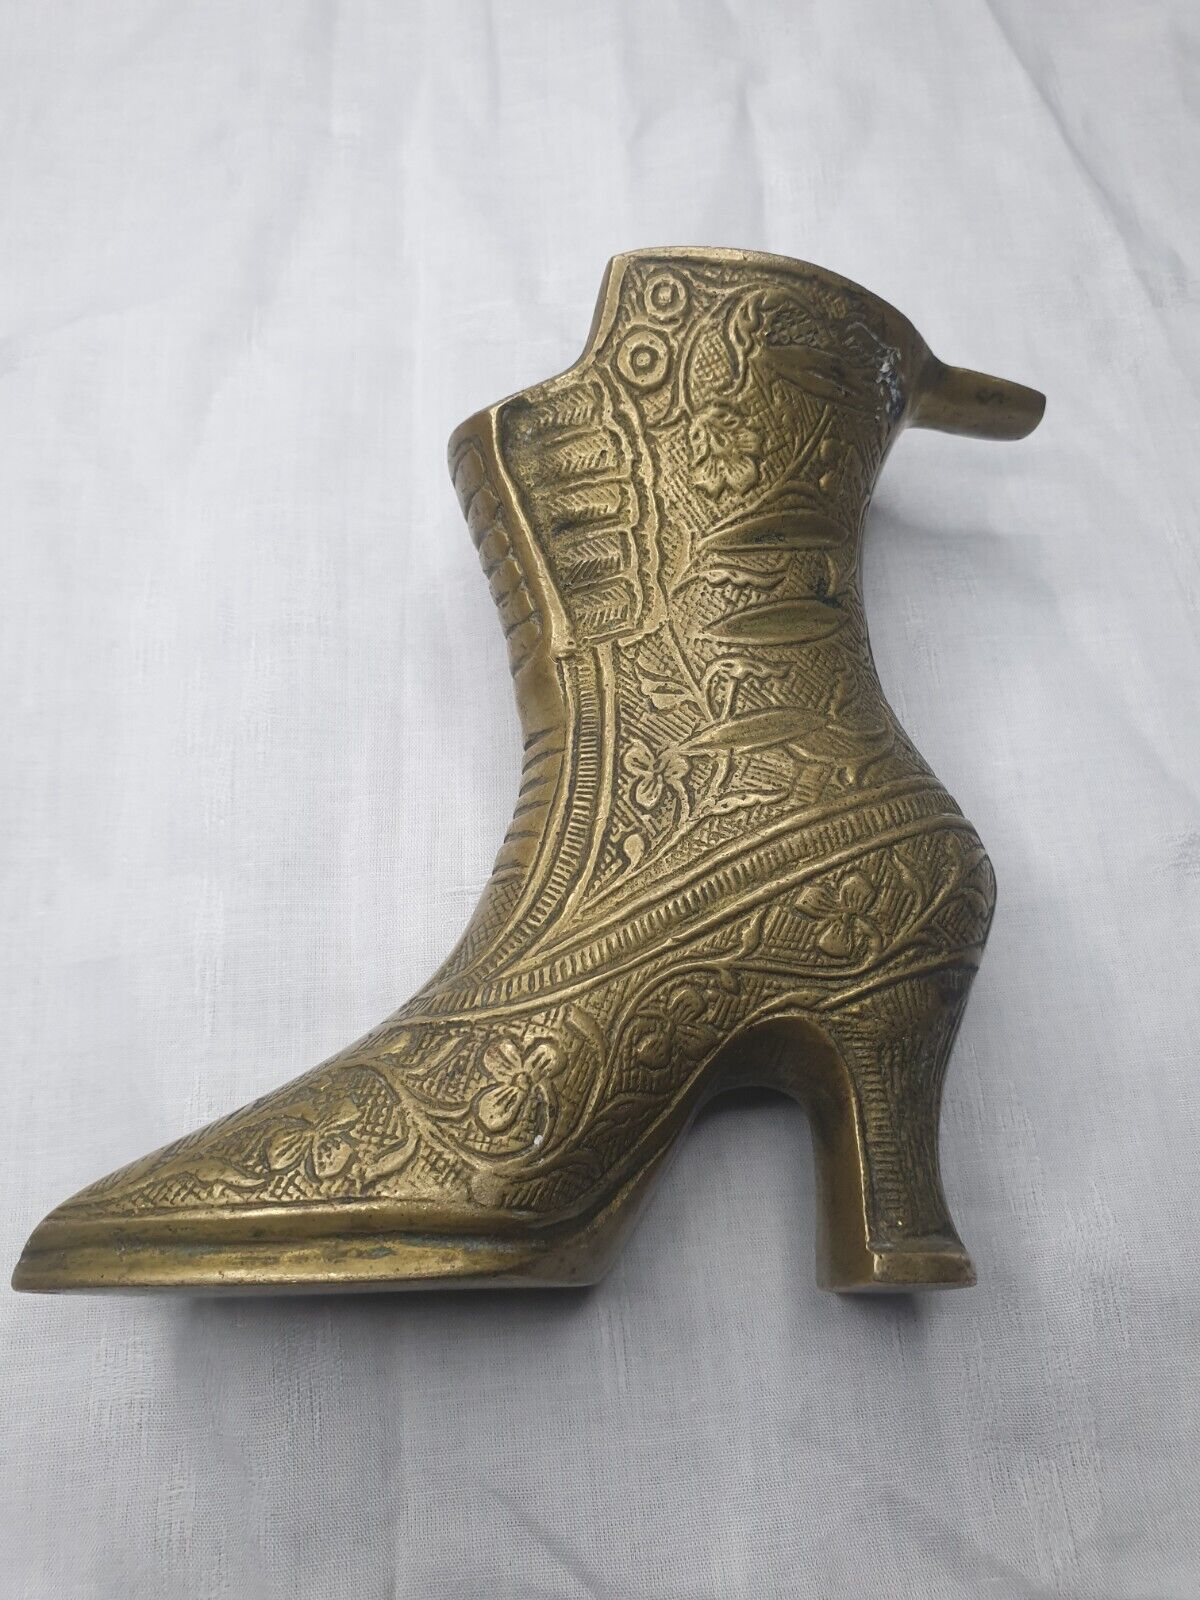 Brass Ashtray Unique Look In Ladies Shoe Look Best Gift For Husband Boyfriend